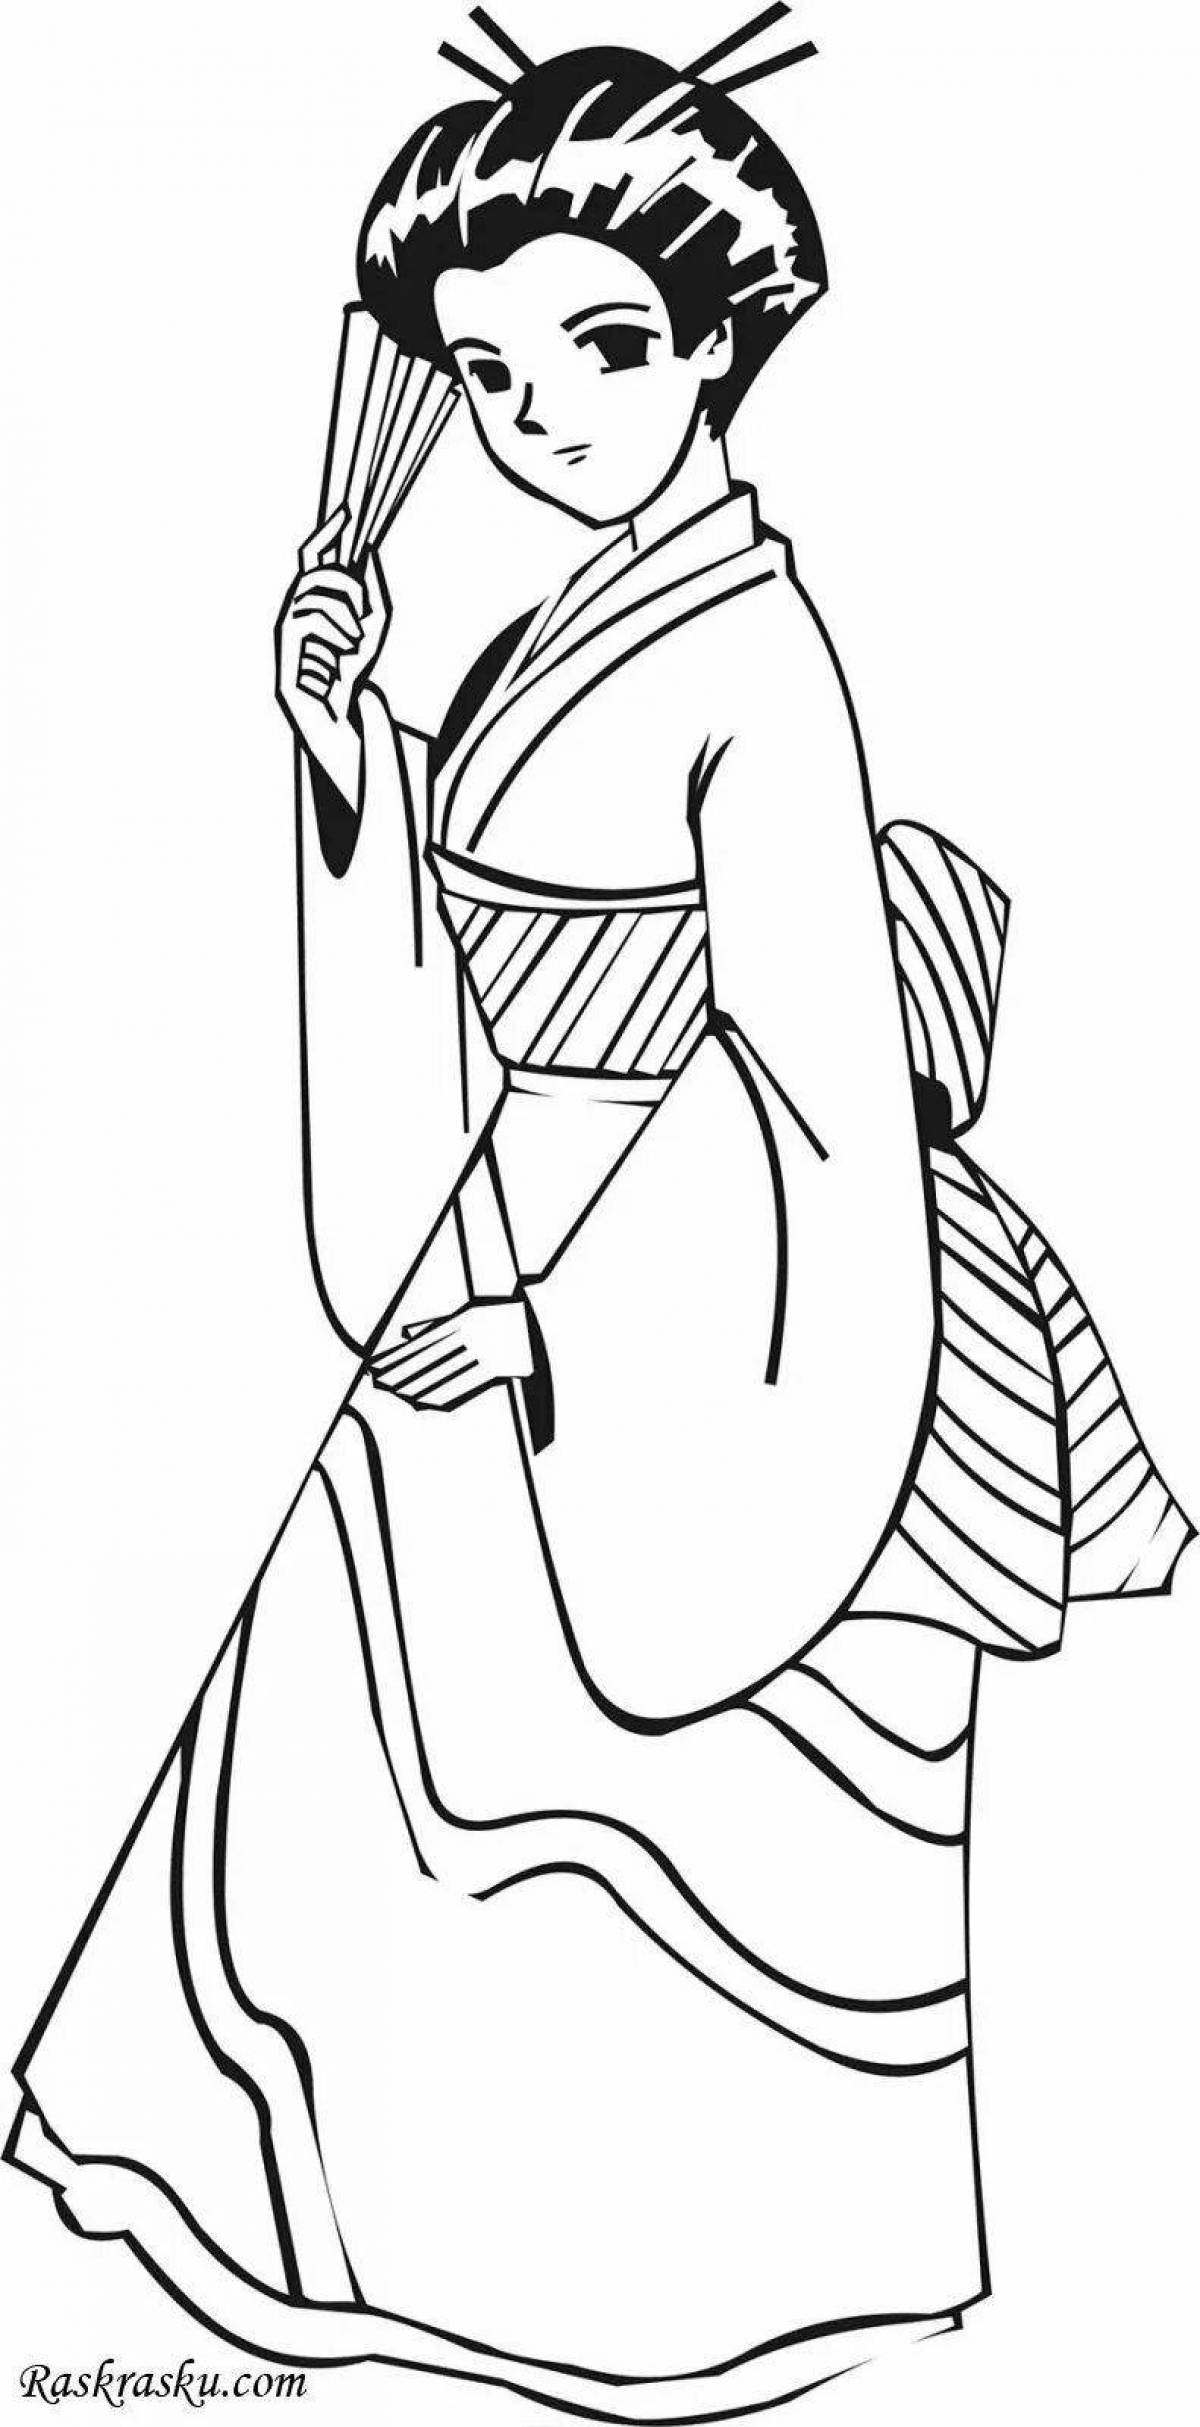 Charming Japanese woman in kimono